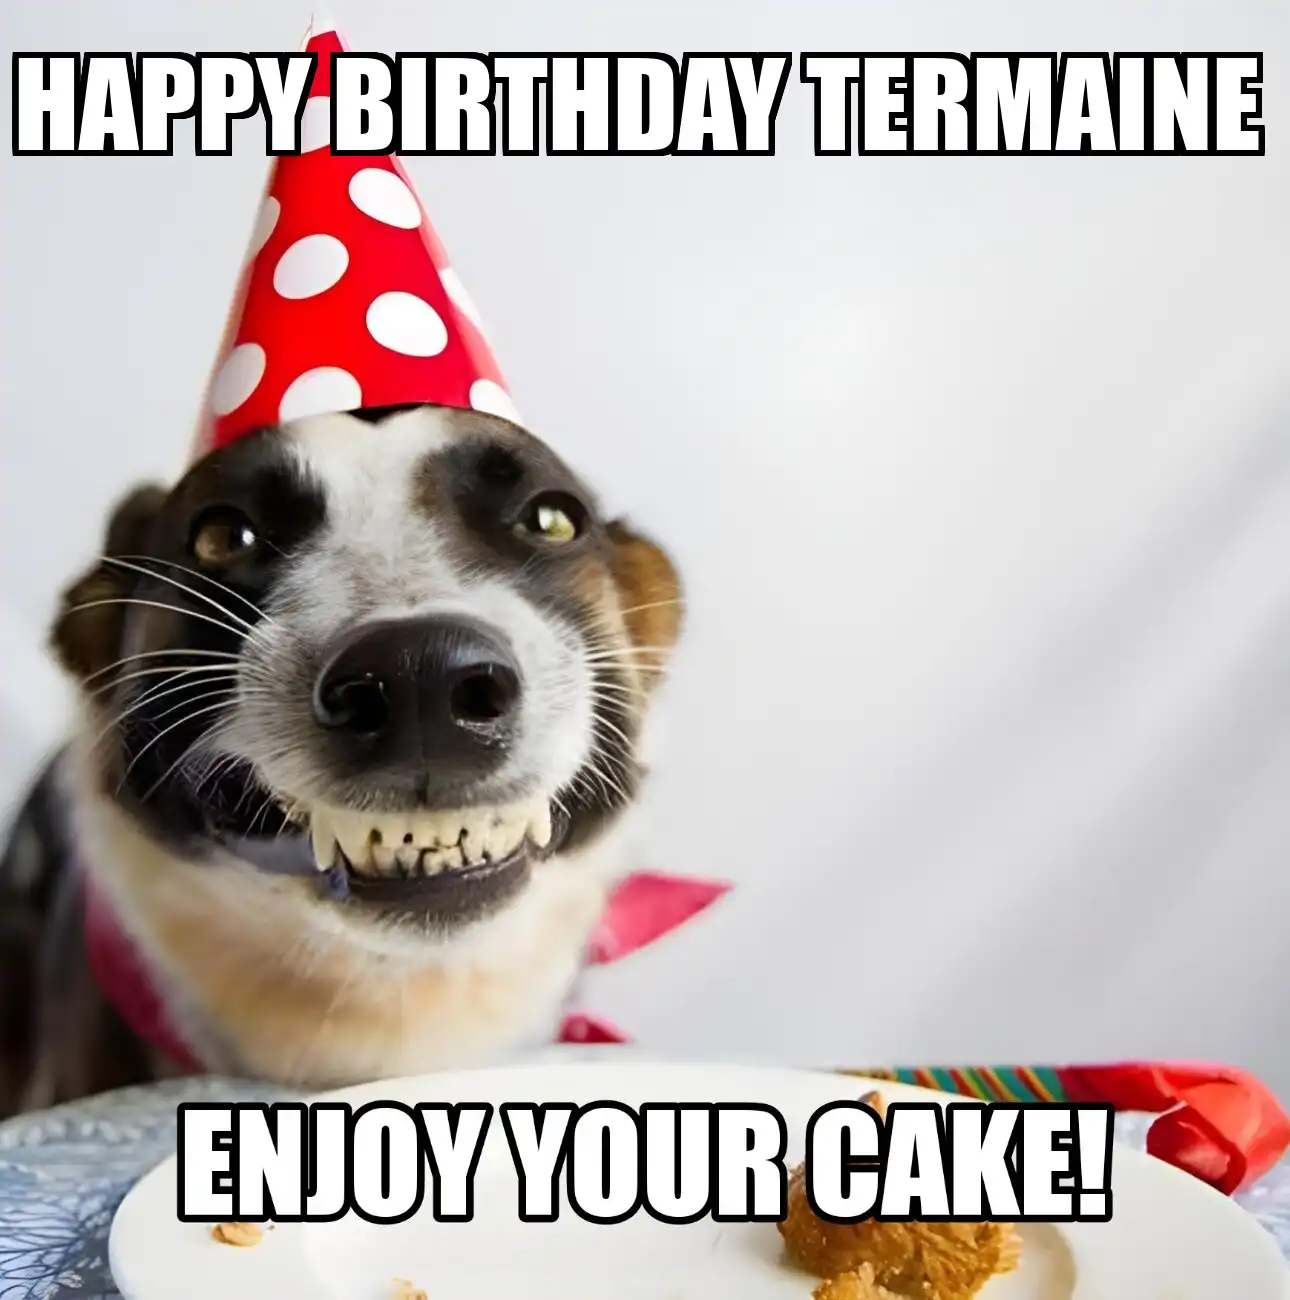 Happy Birthday Termaine Enjoy Your Cake Dog Meme